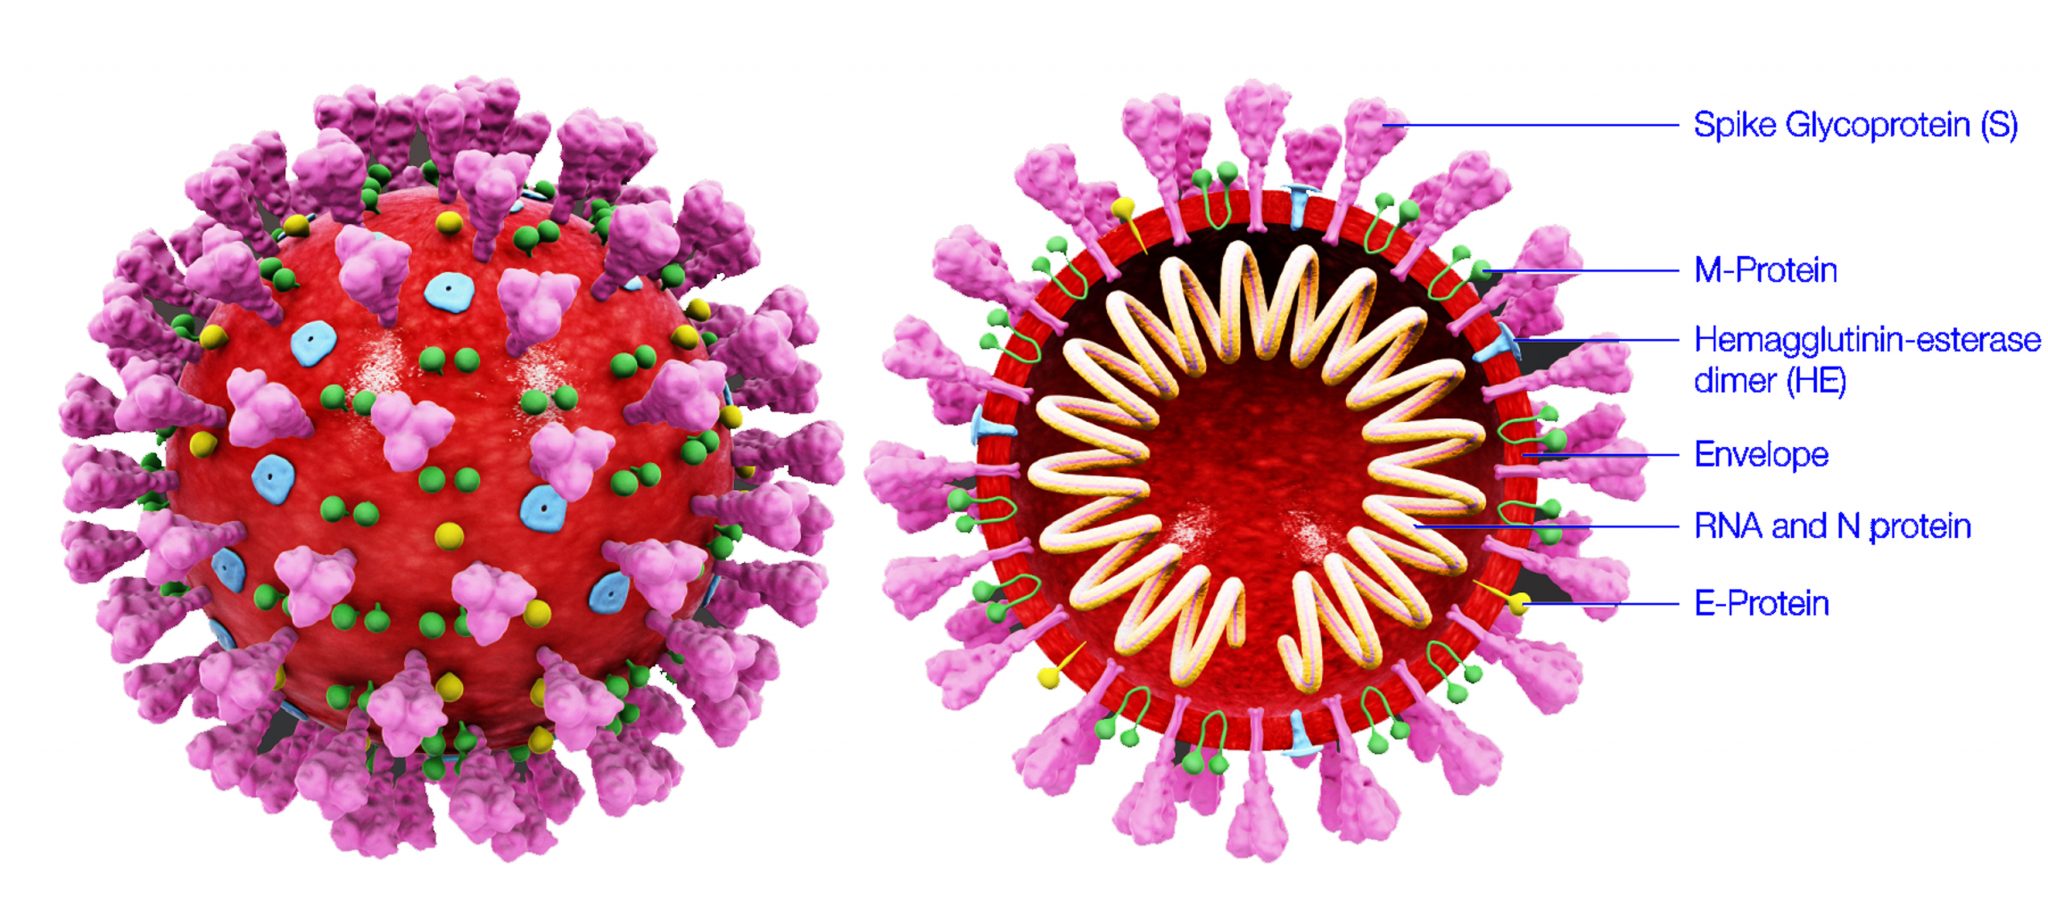 коронавирус и синонимы картинки